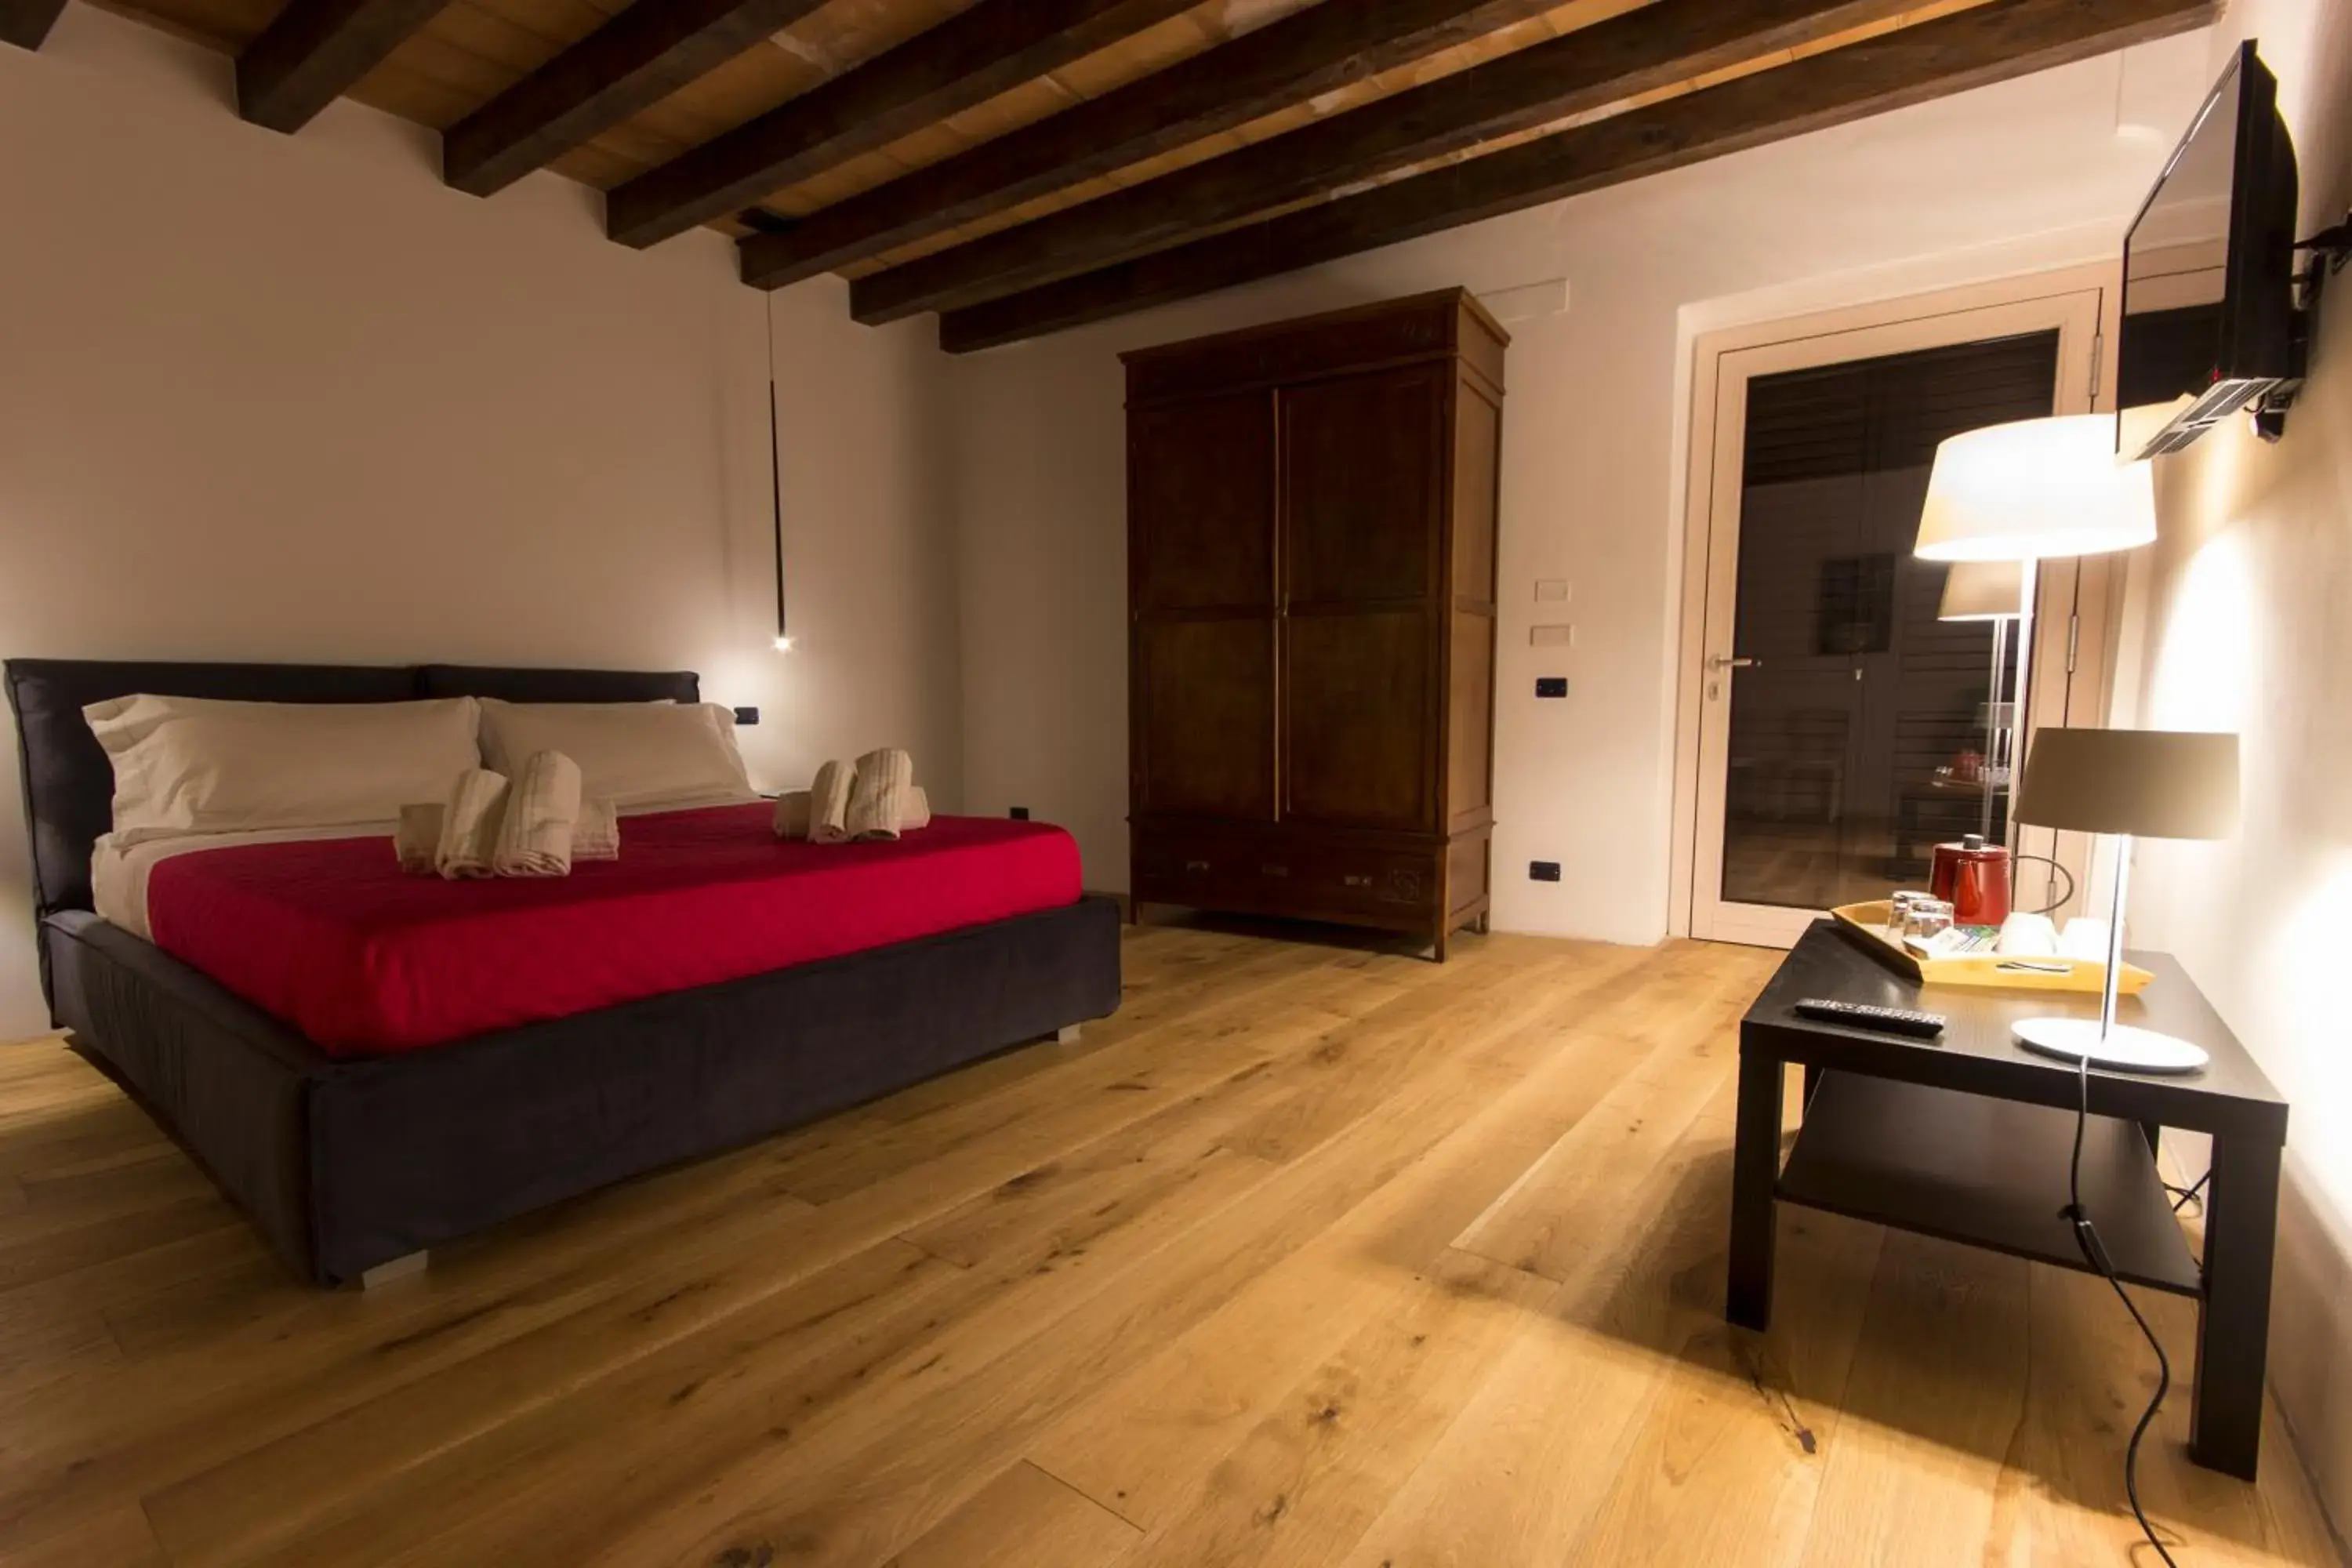 Bedroom, Room Photo in Antichi Ricordi